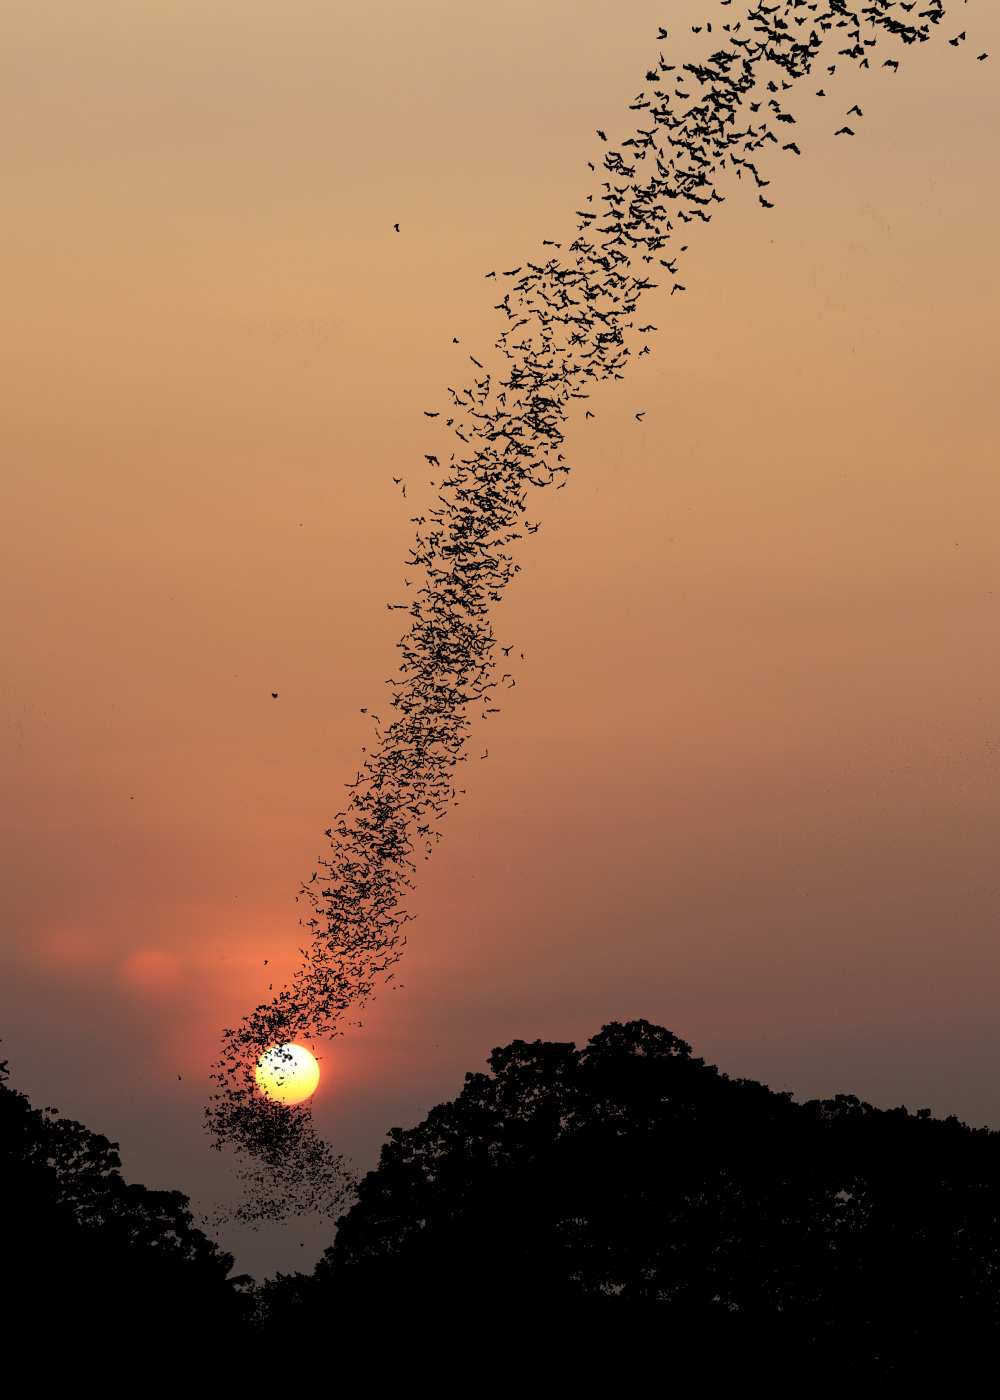 Bat swarm at sunset a Jean De Spiegeleer